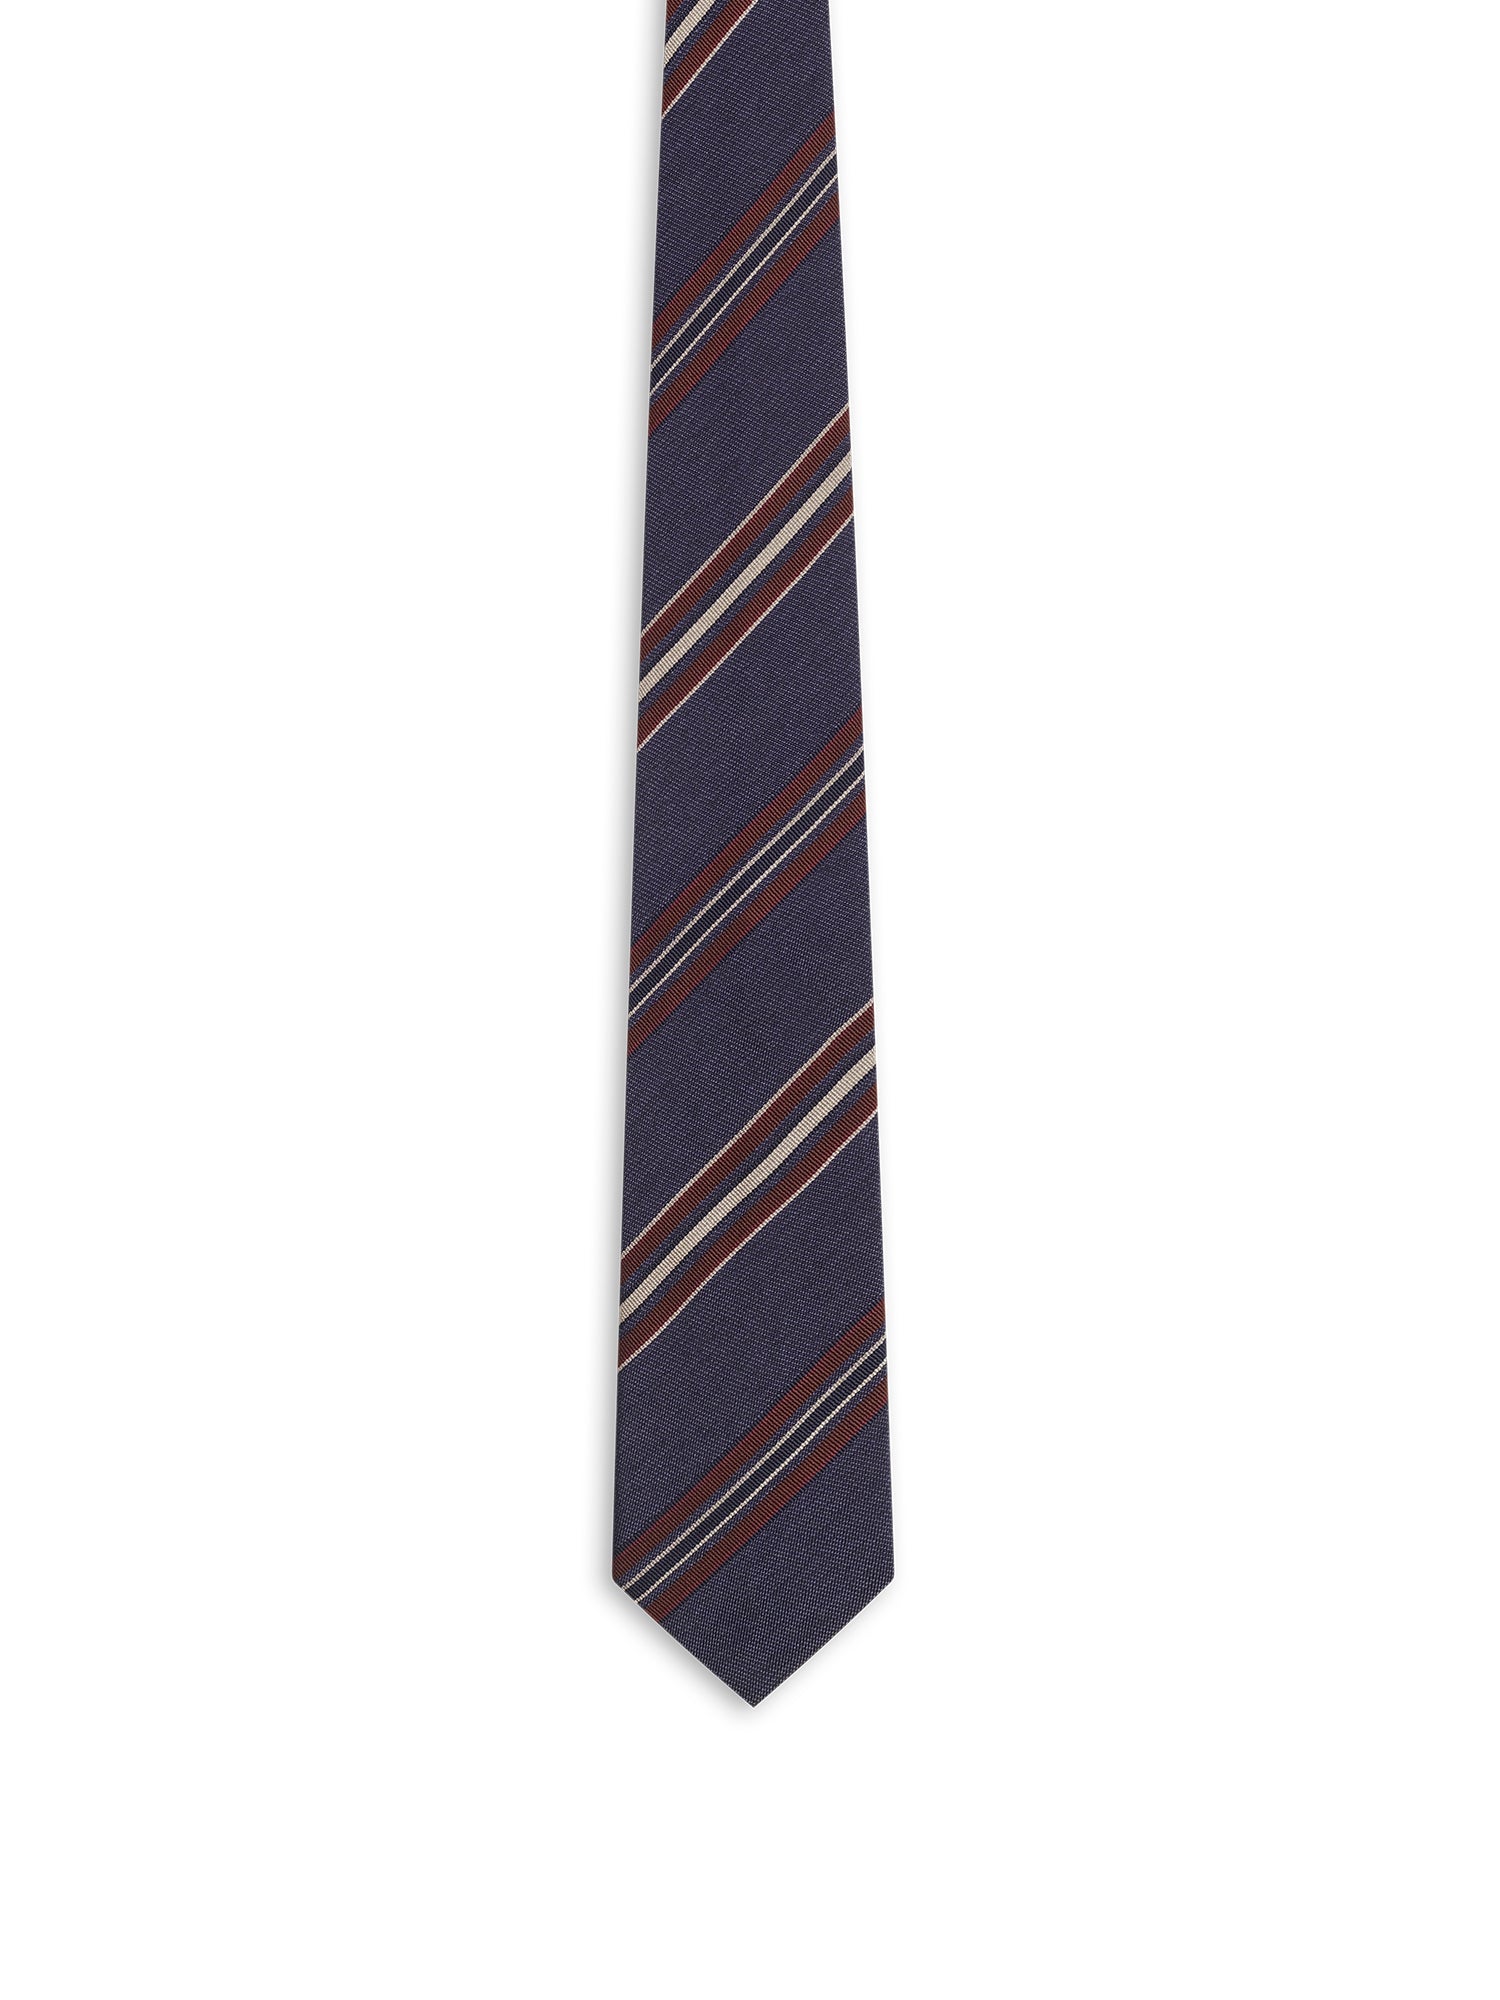 Ferruccio Tie